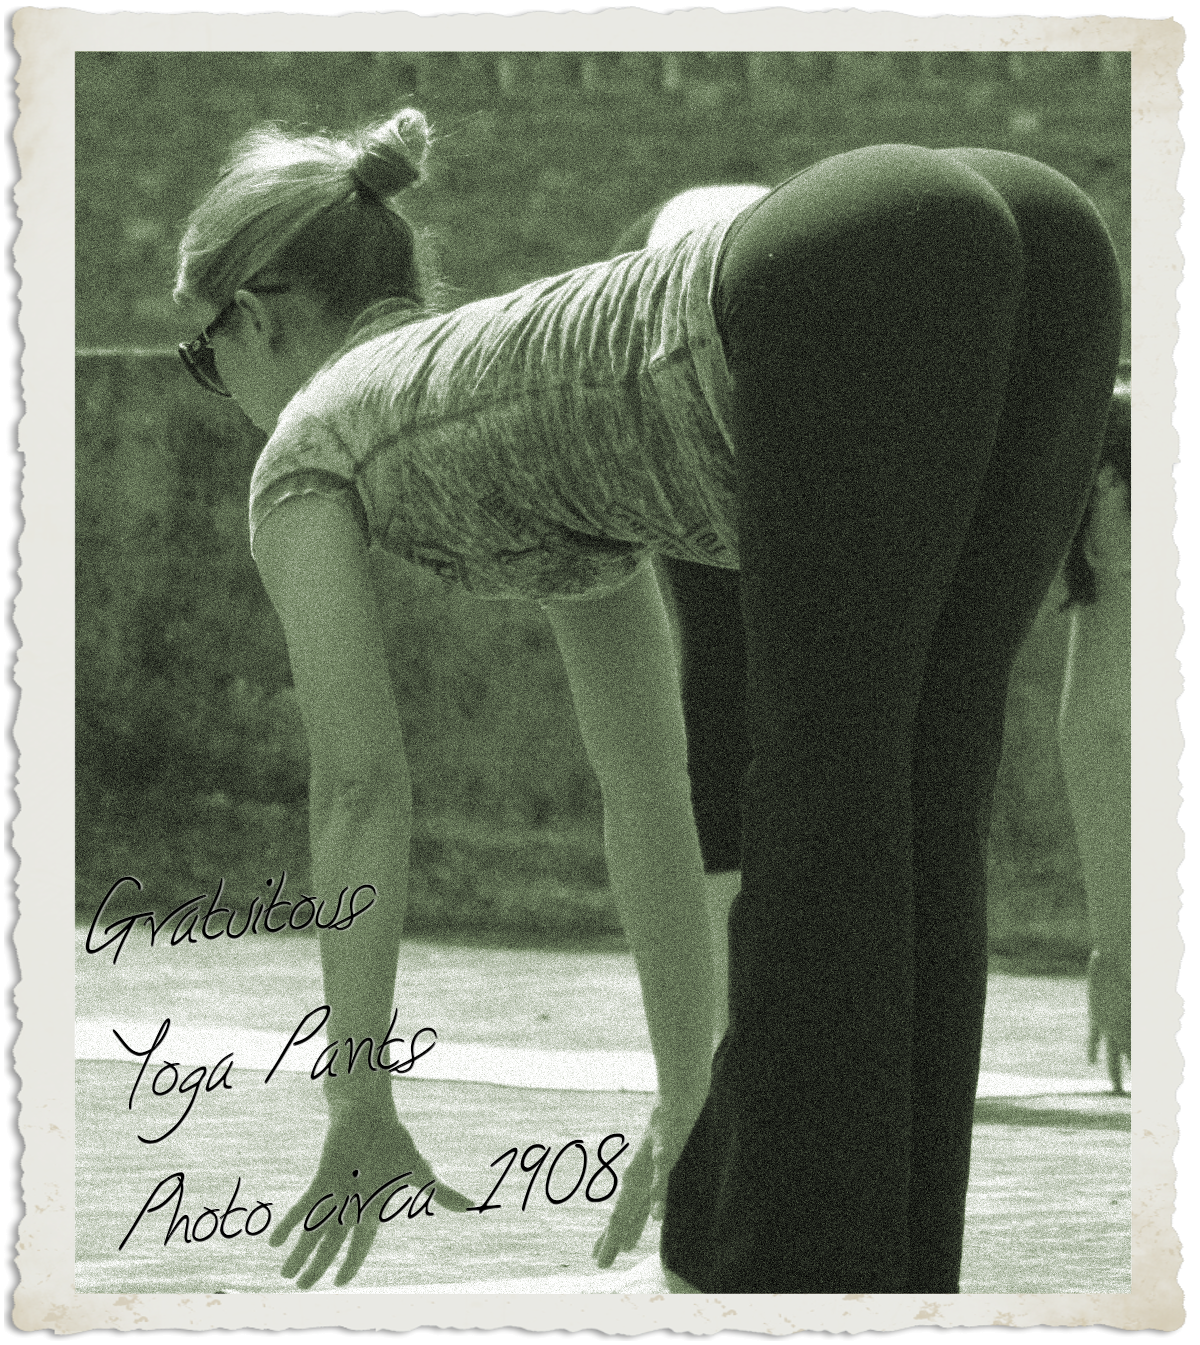 Gratuitous Yoga Pants Photo circa 1908